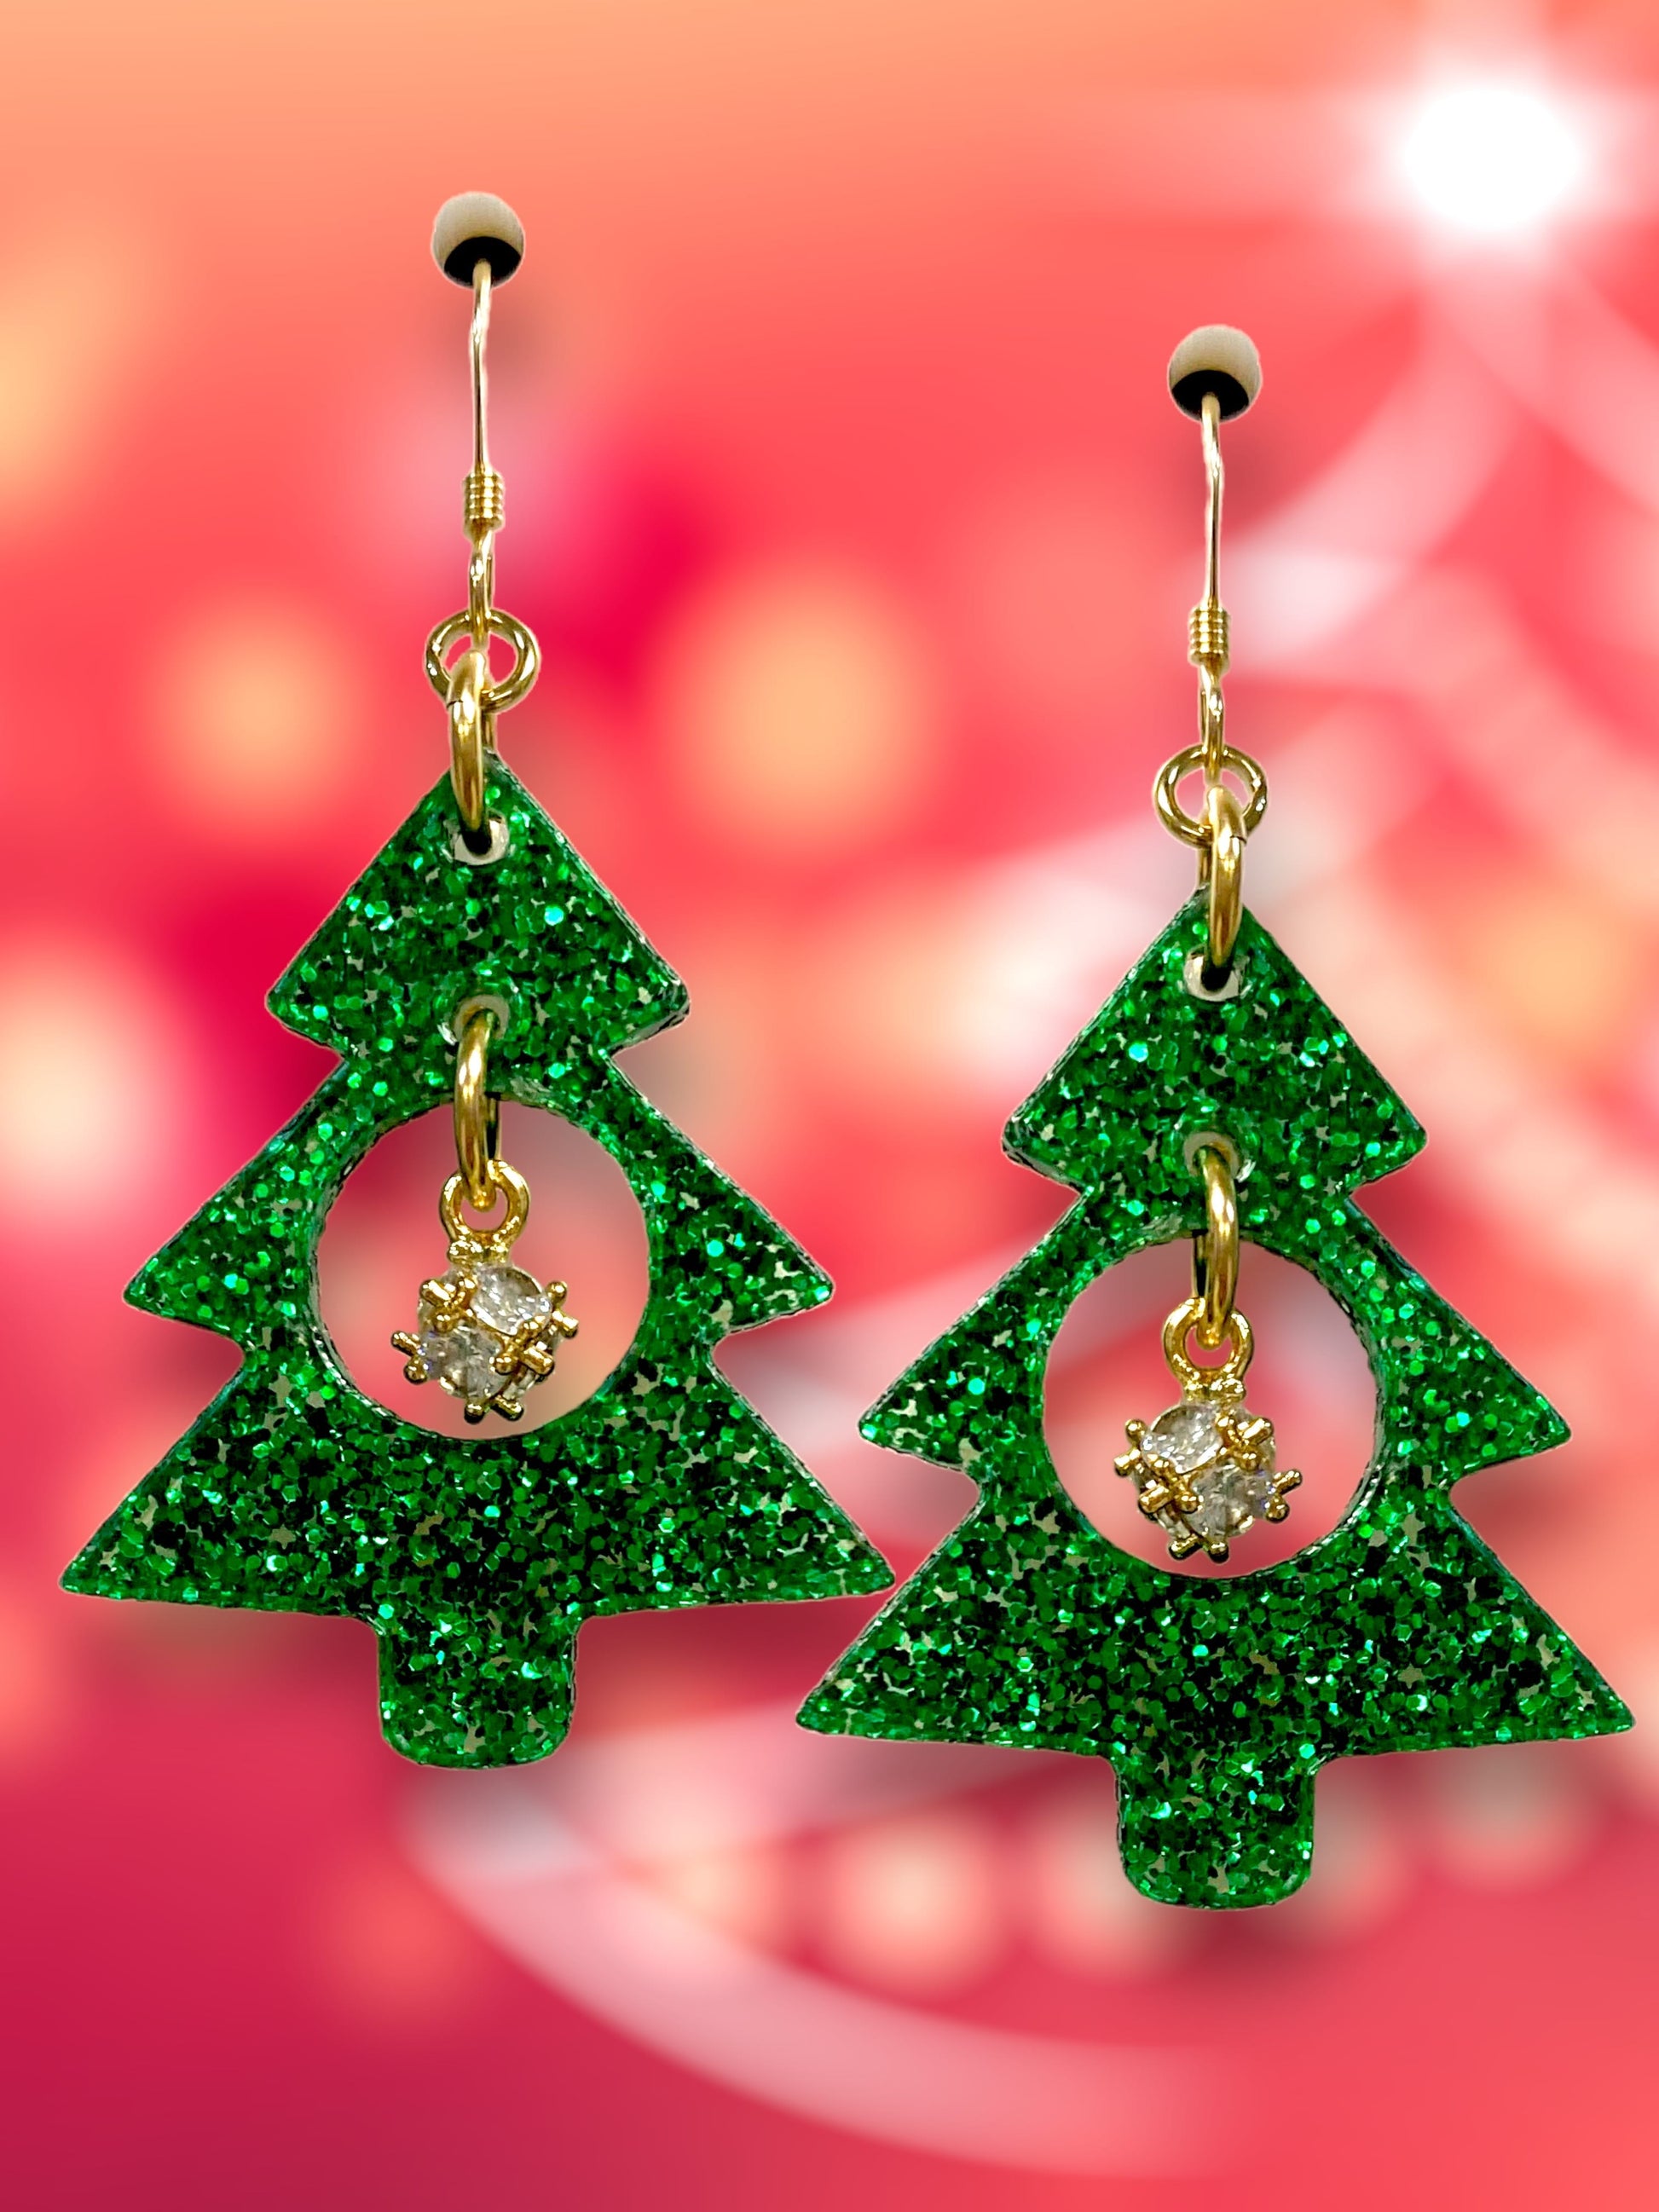 Golden Drop Christmas Tree Earring  - Christmas Jewelry Making Kit